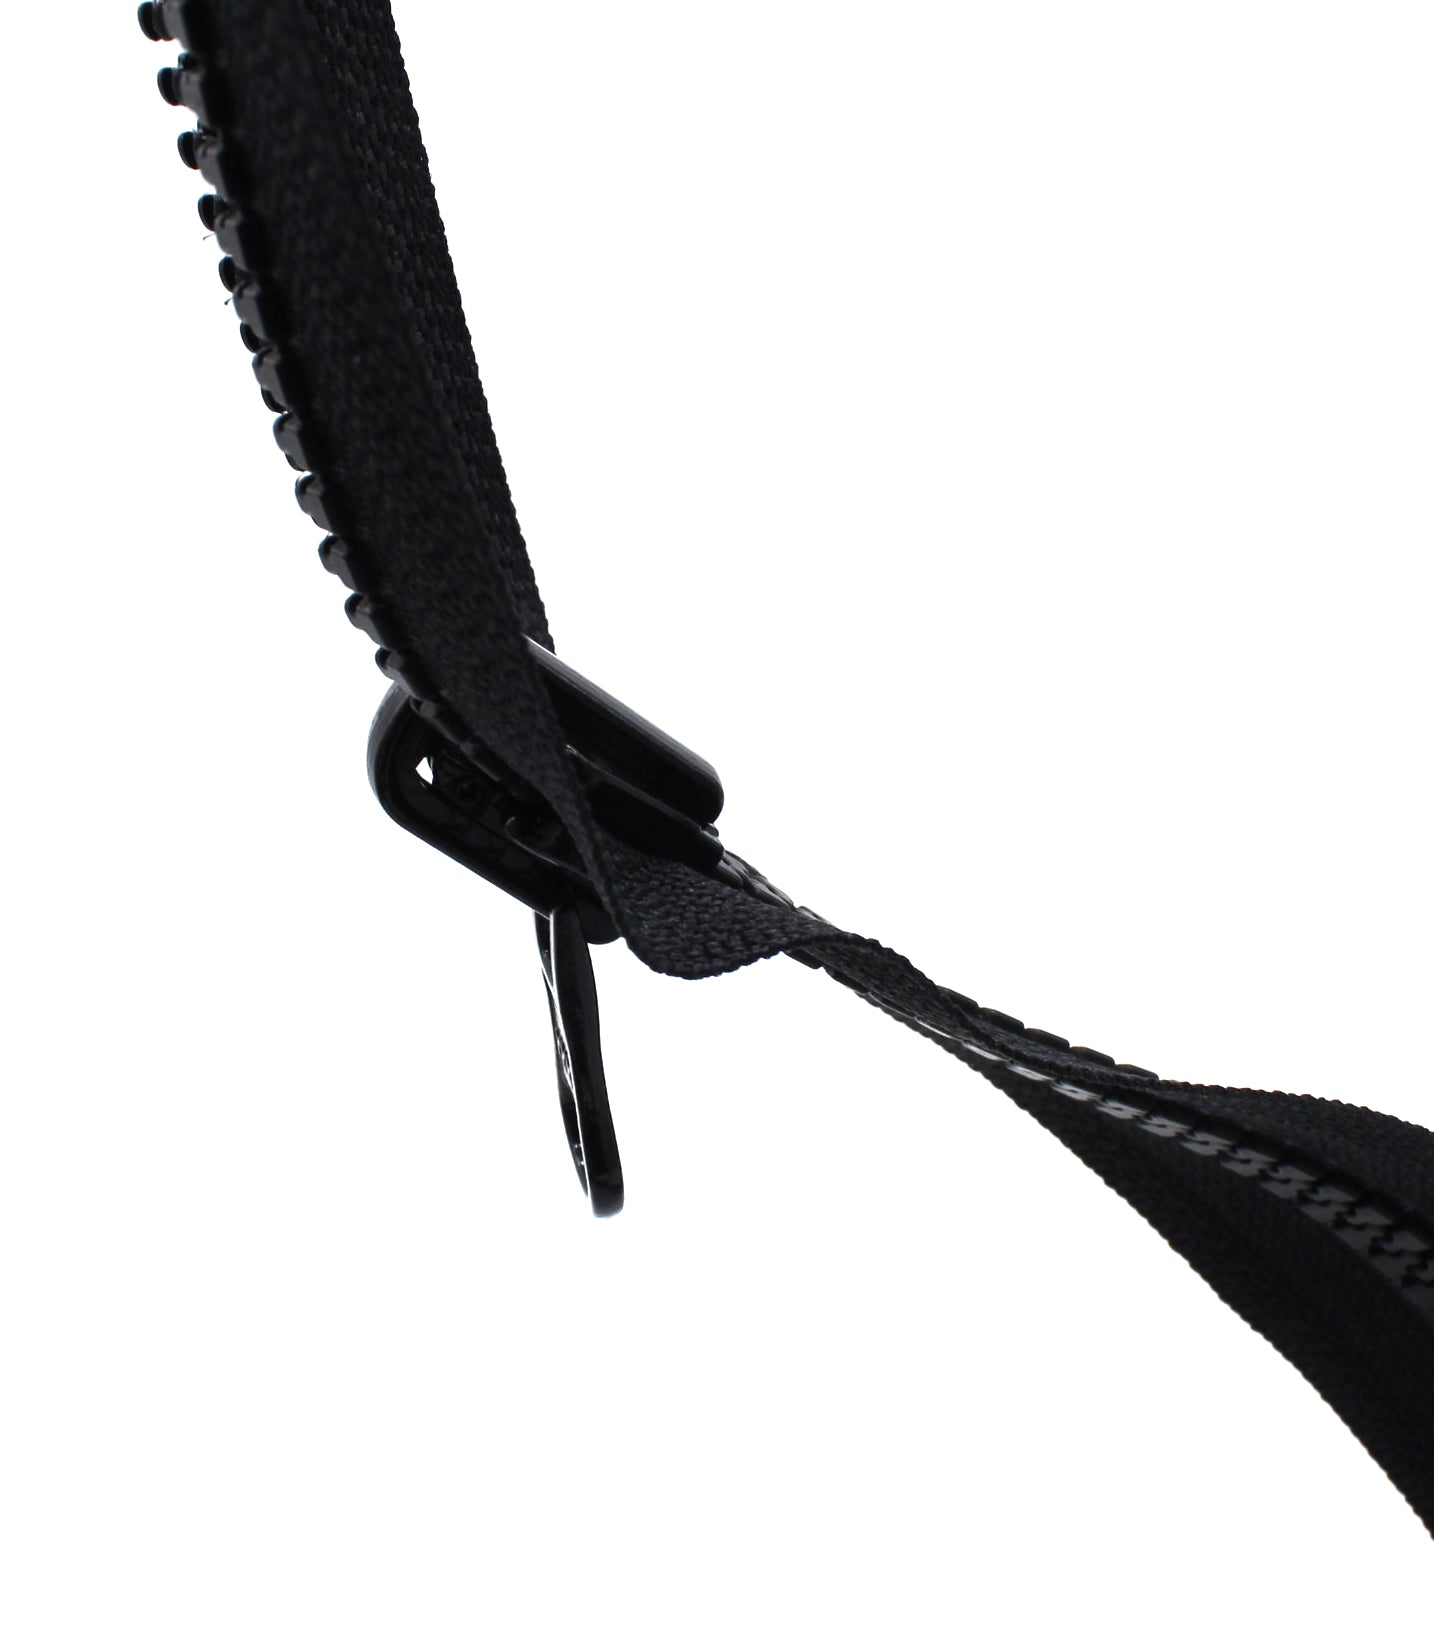 (Black) Reversible Nylon Jacket Zippers 18